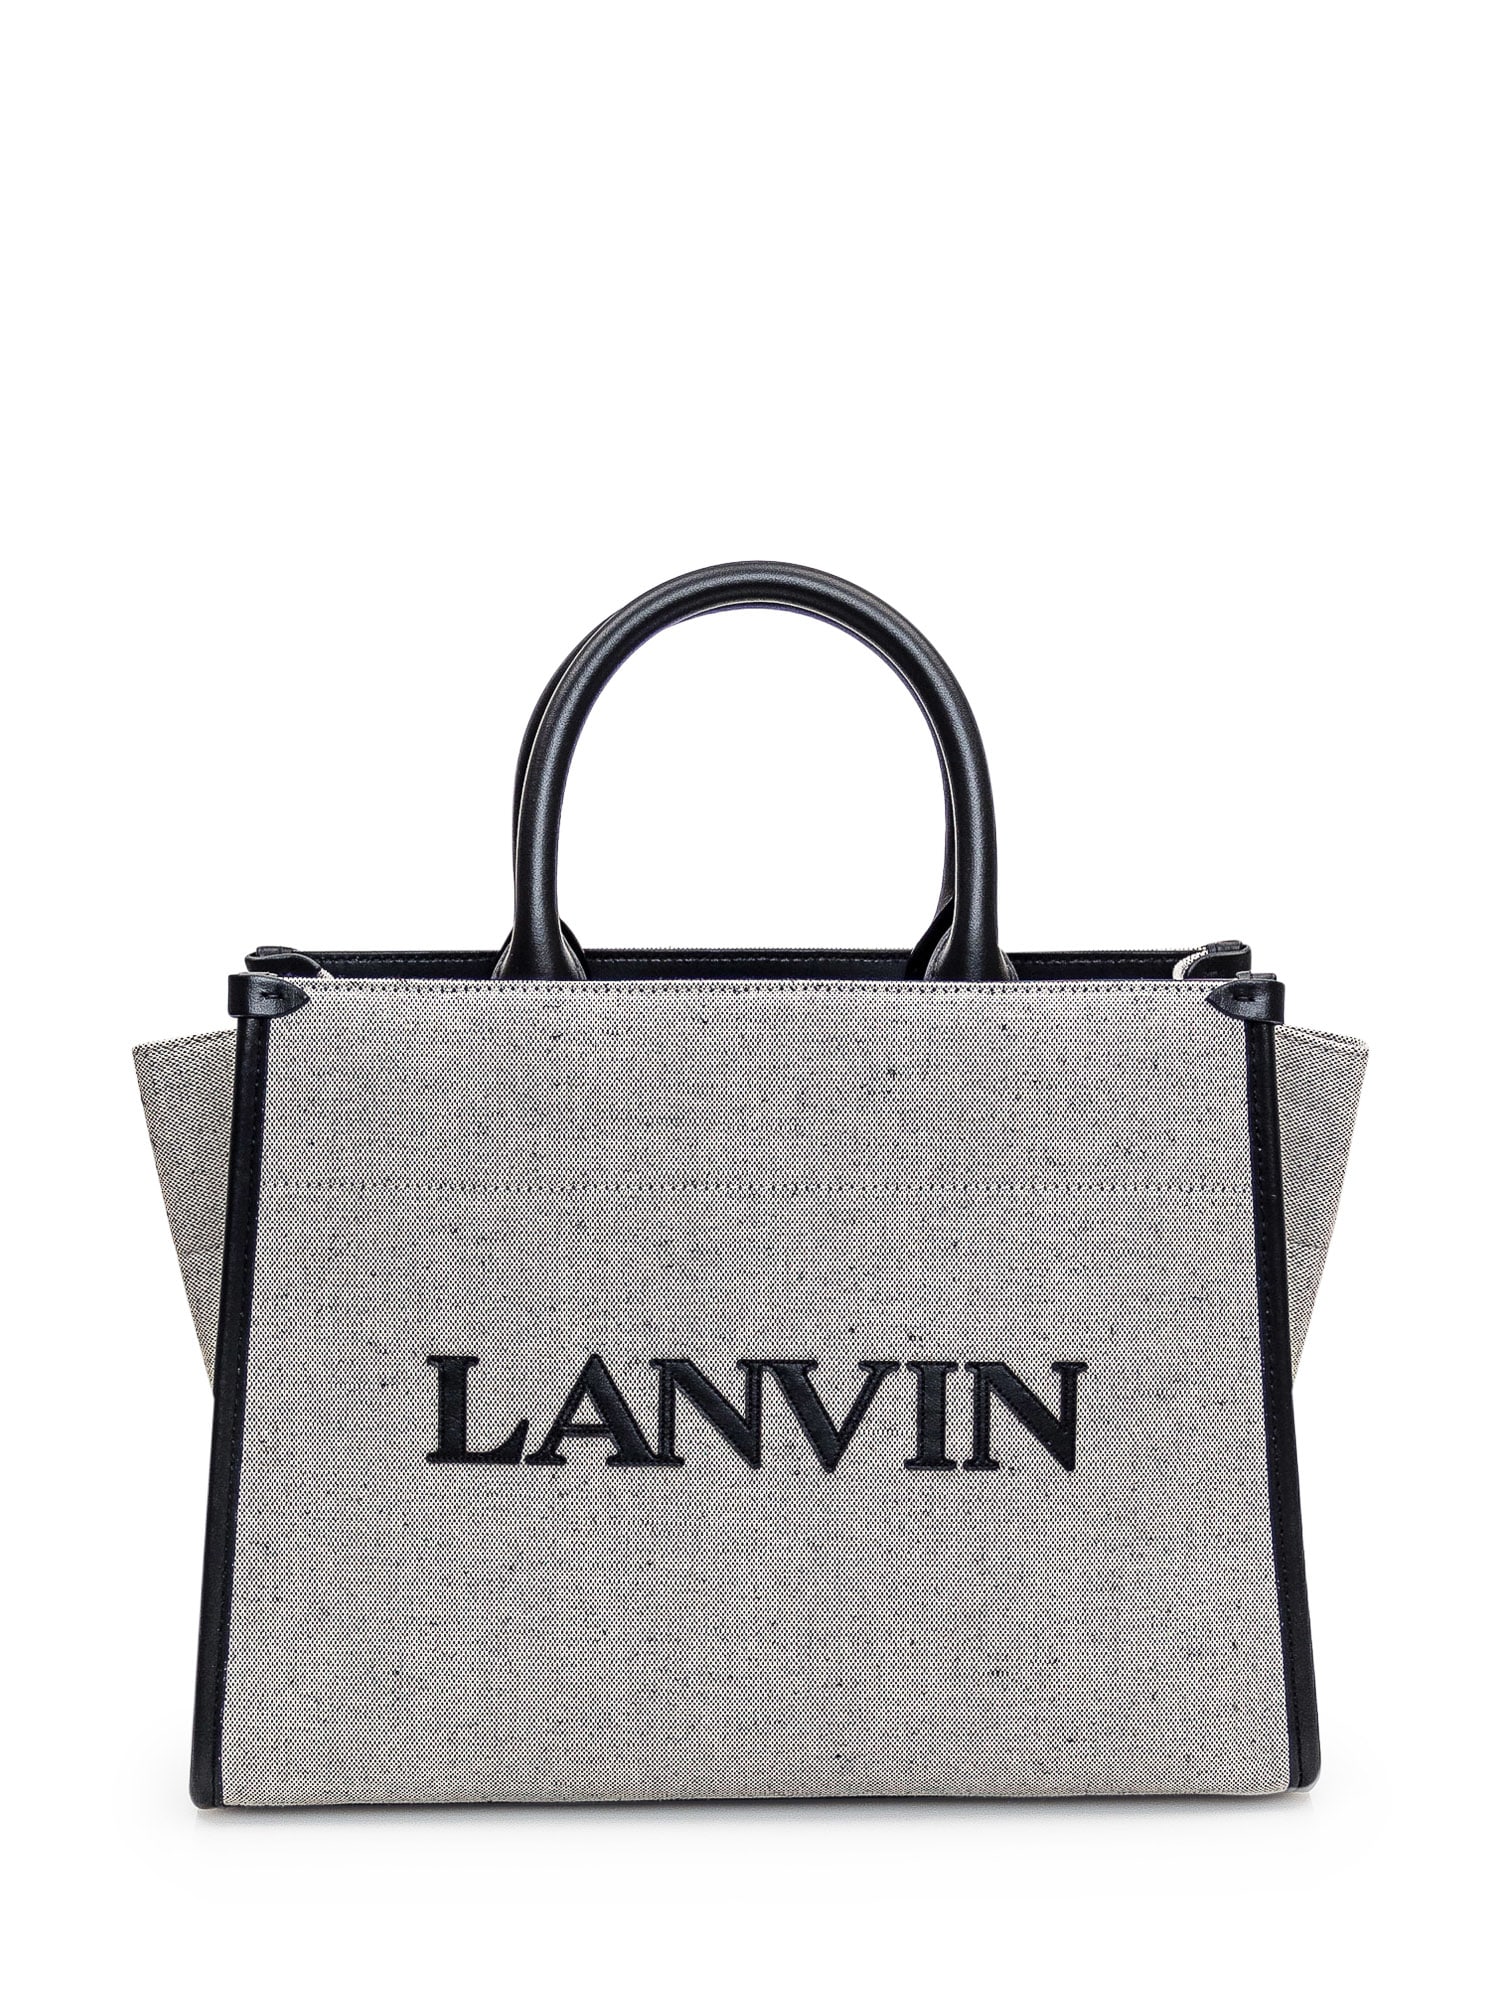 Lanvin Tote Bag In Beige/black